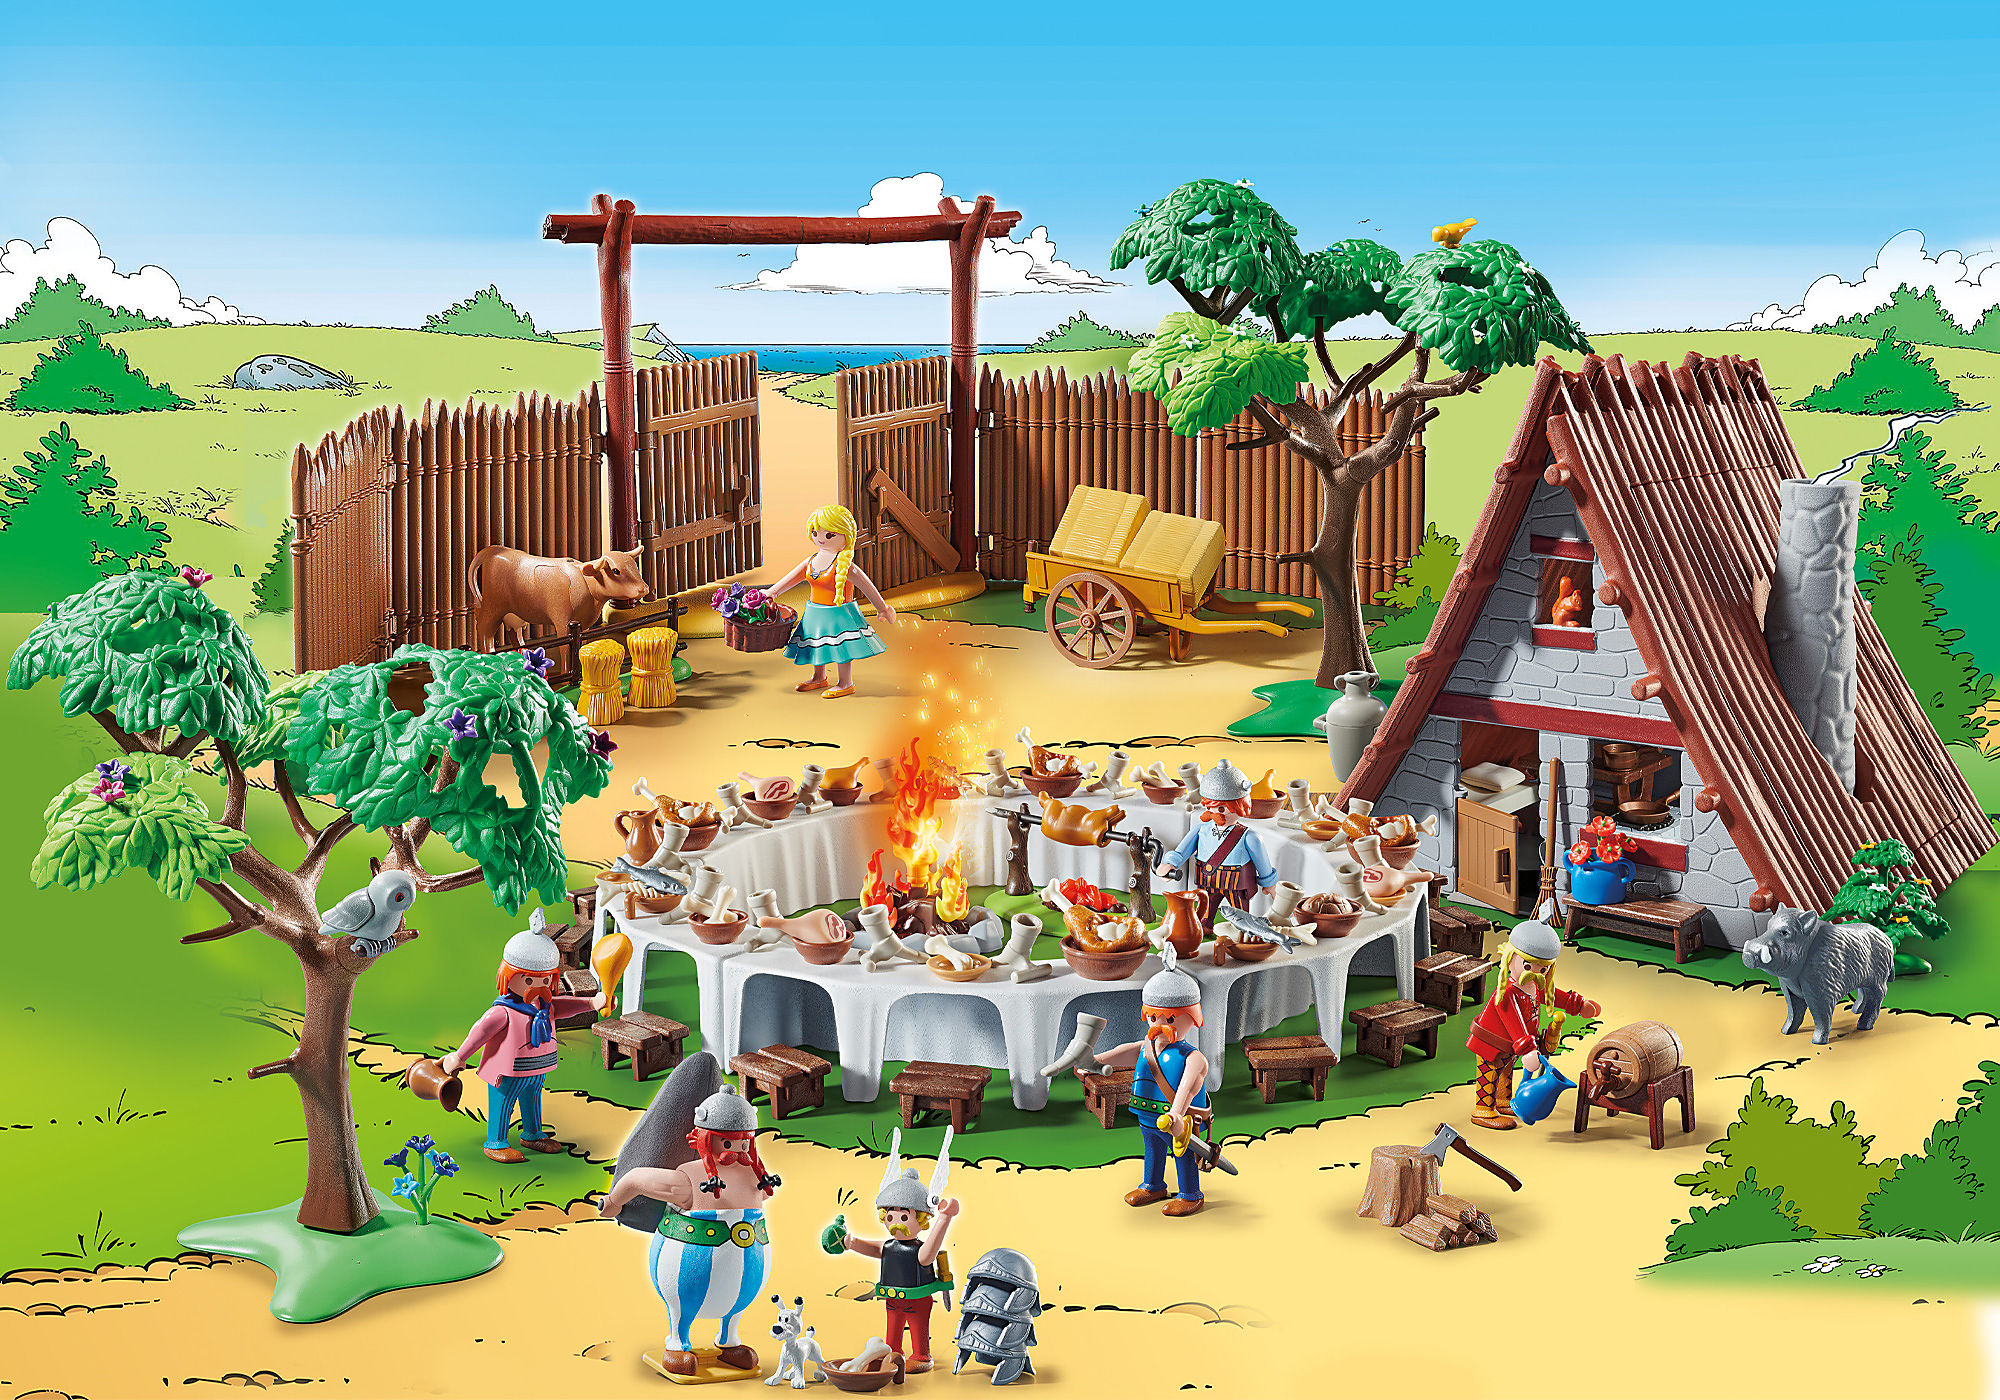 Playmobil Asterix - Asurancetúrix with tree house